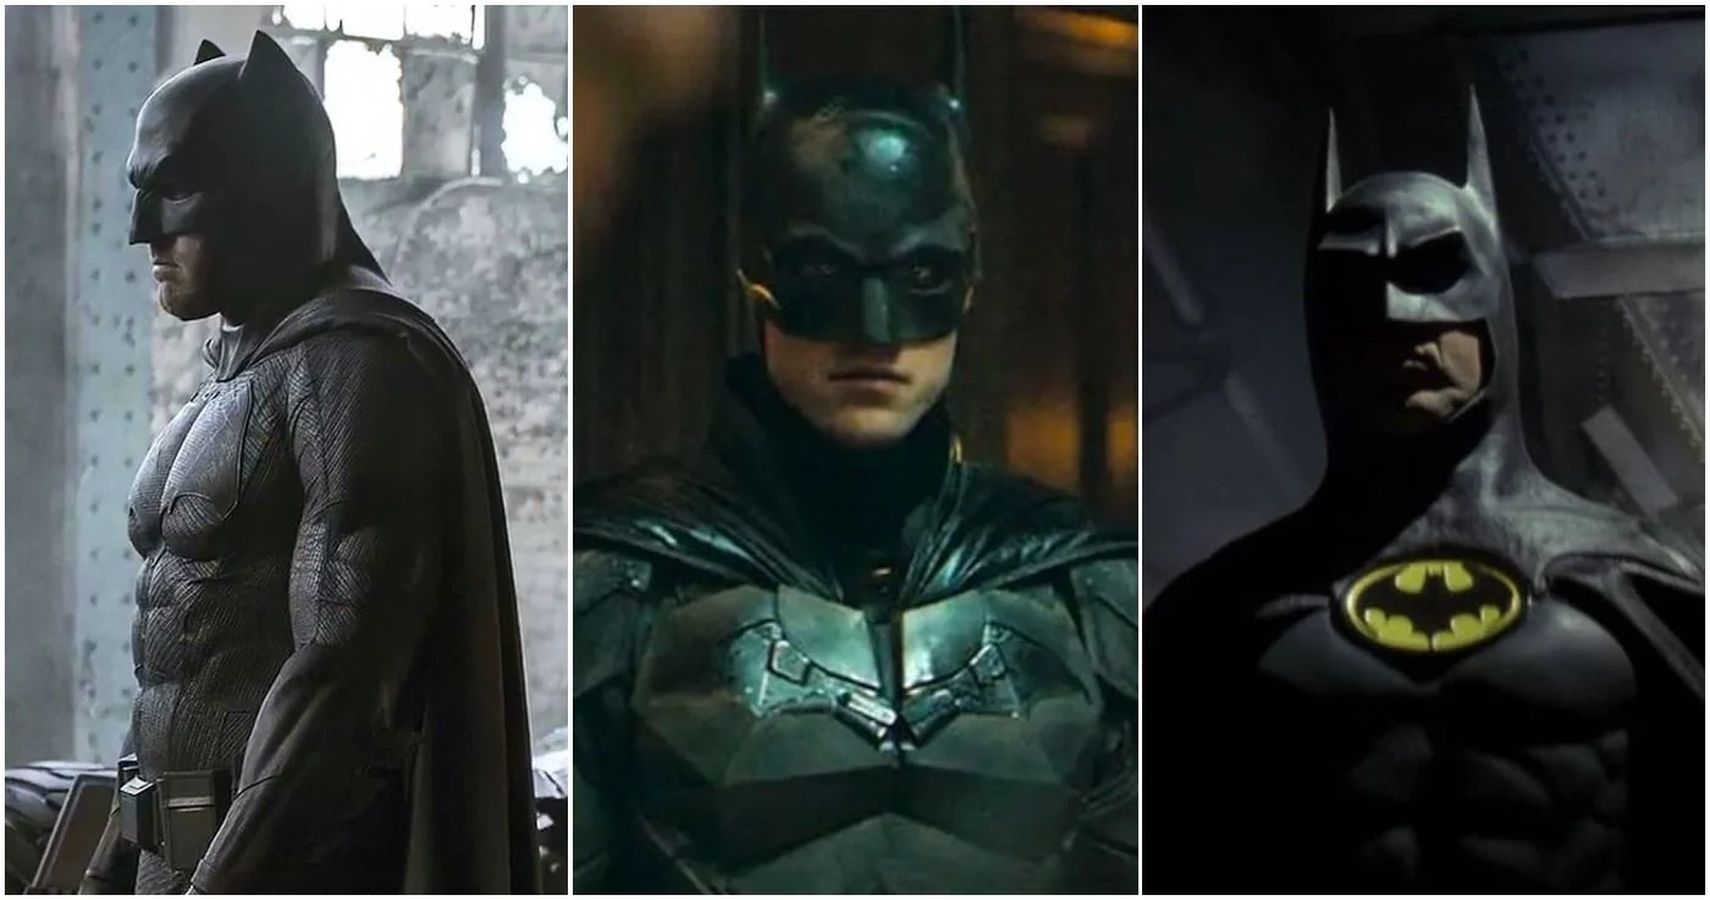 A split image of Brad Pitt, Robert Pattison, and Michael Keaton as DC's Batman in films.